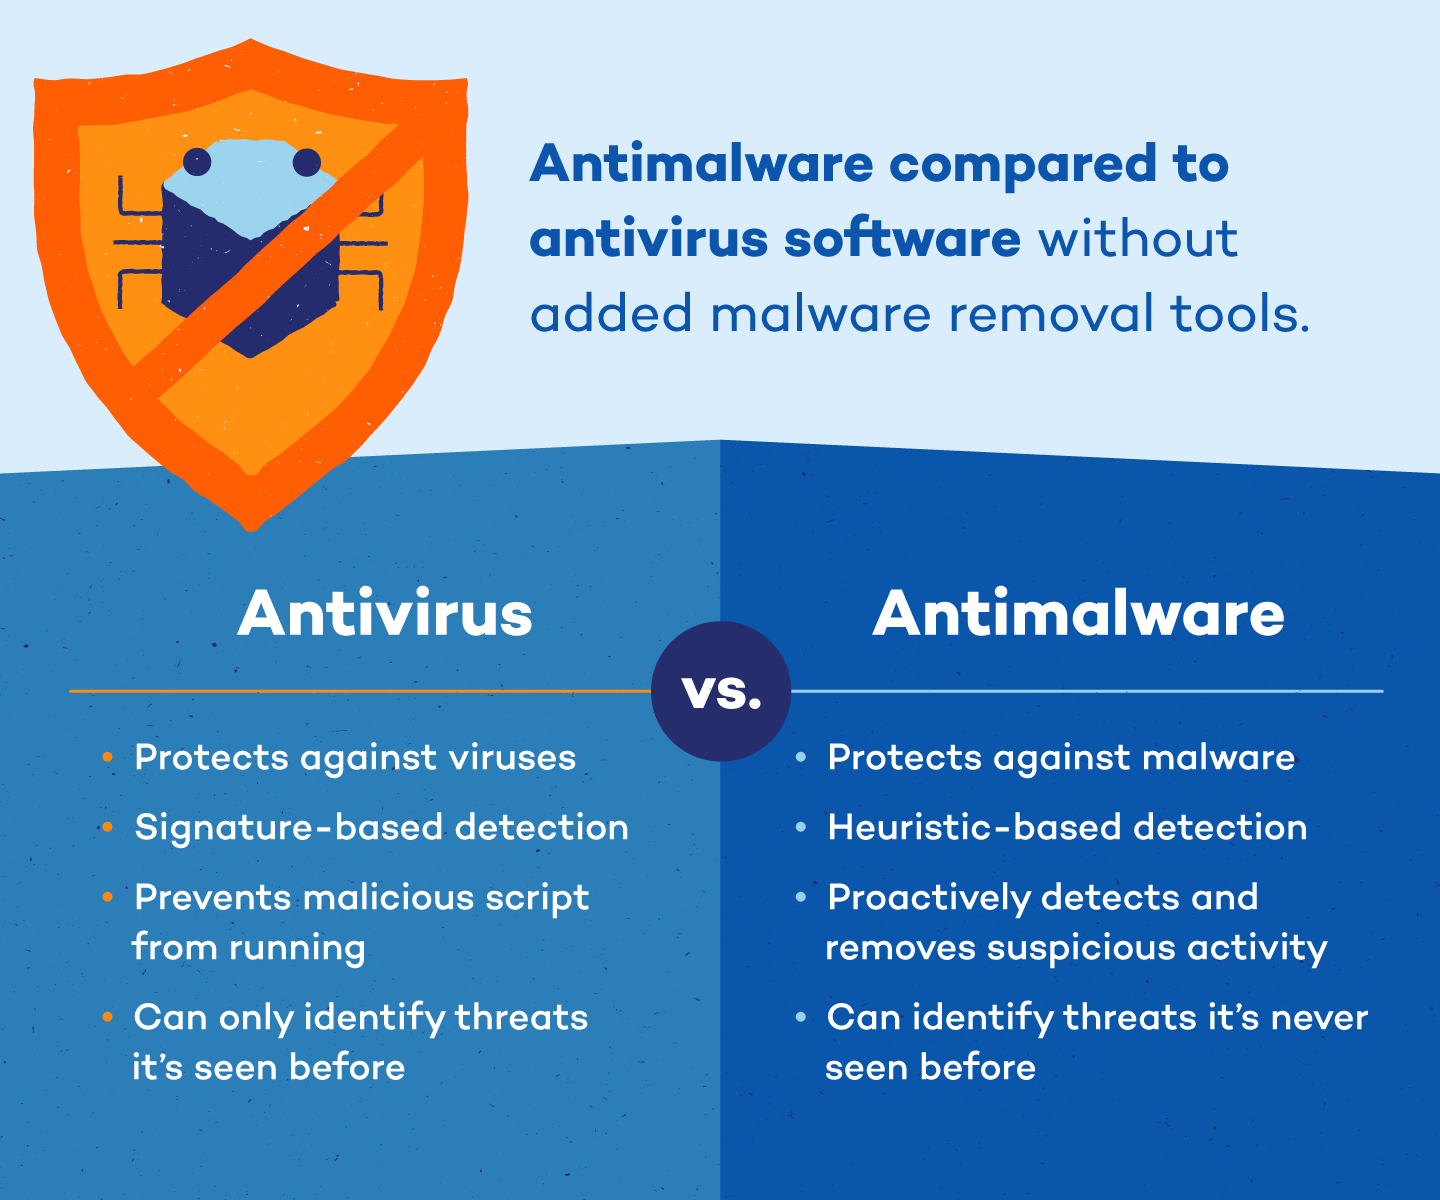 Anti malware vs antivirus